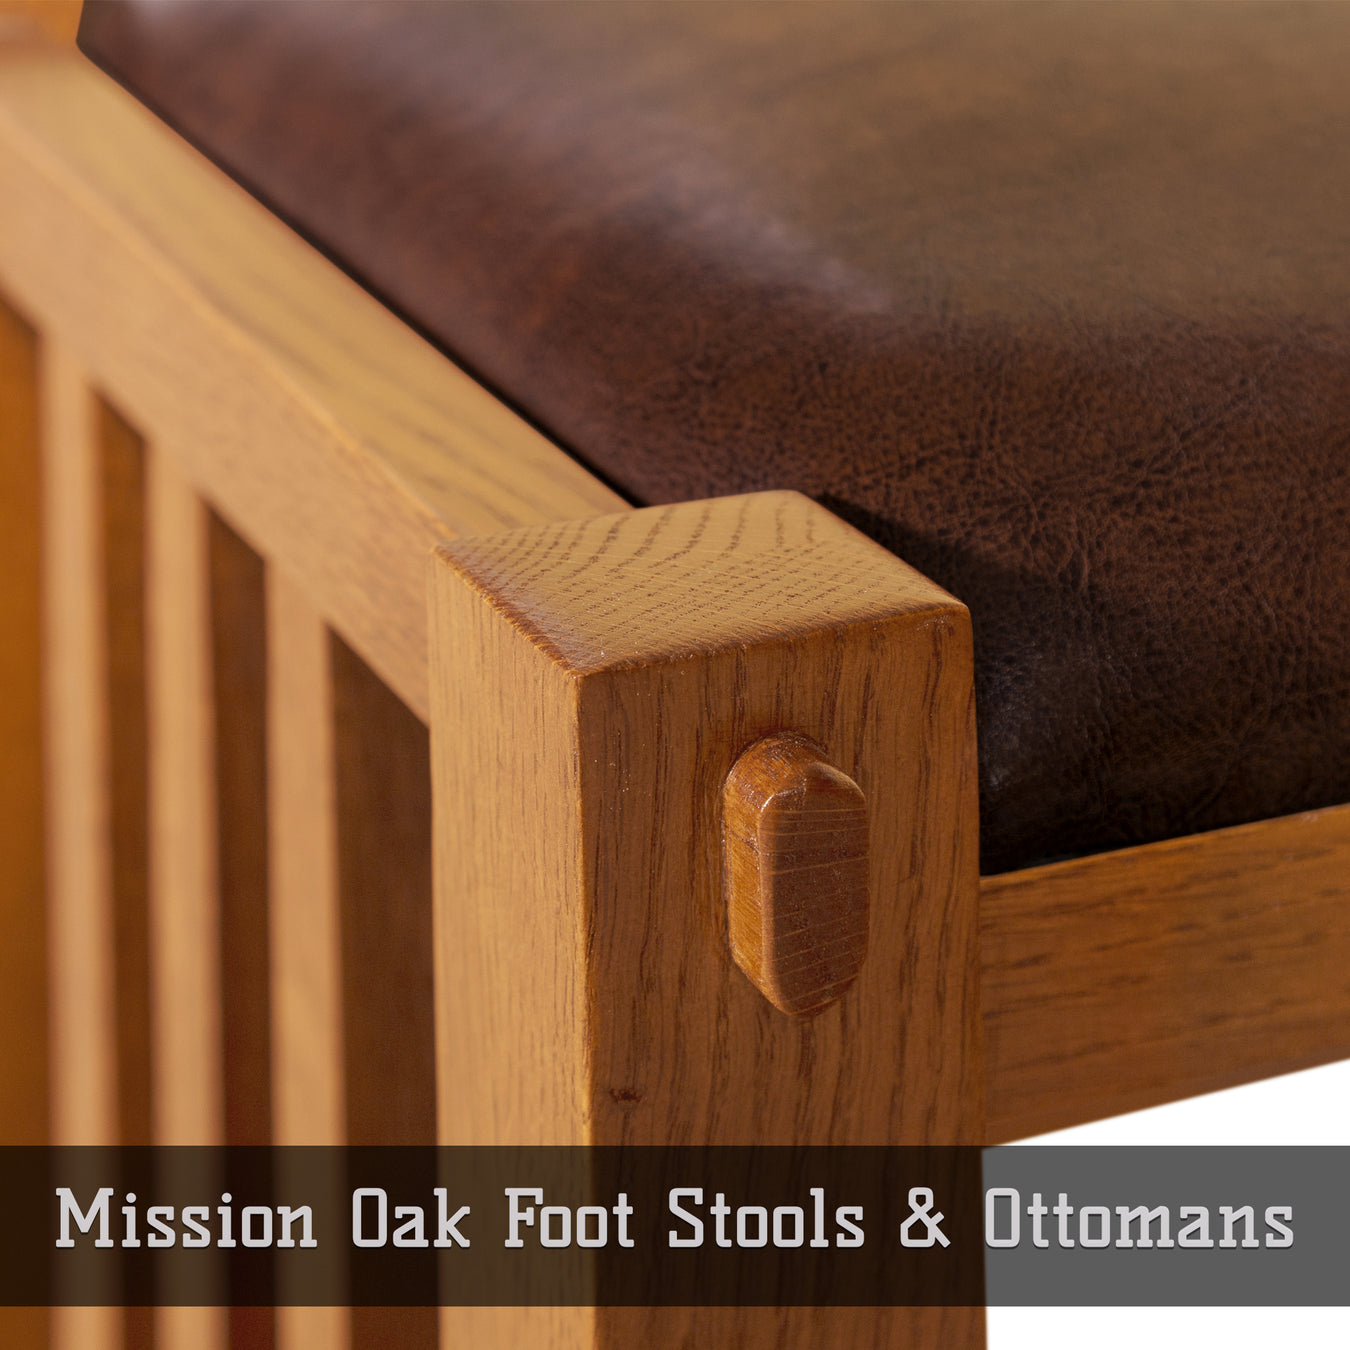 Mission Oak Foot Stools & Ottomans